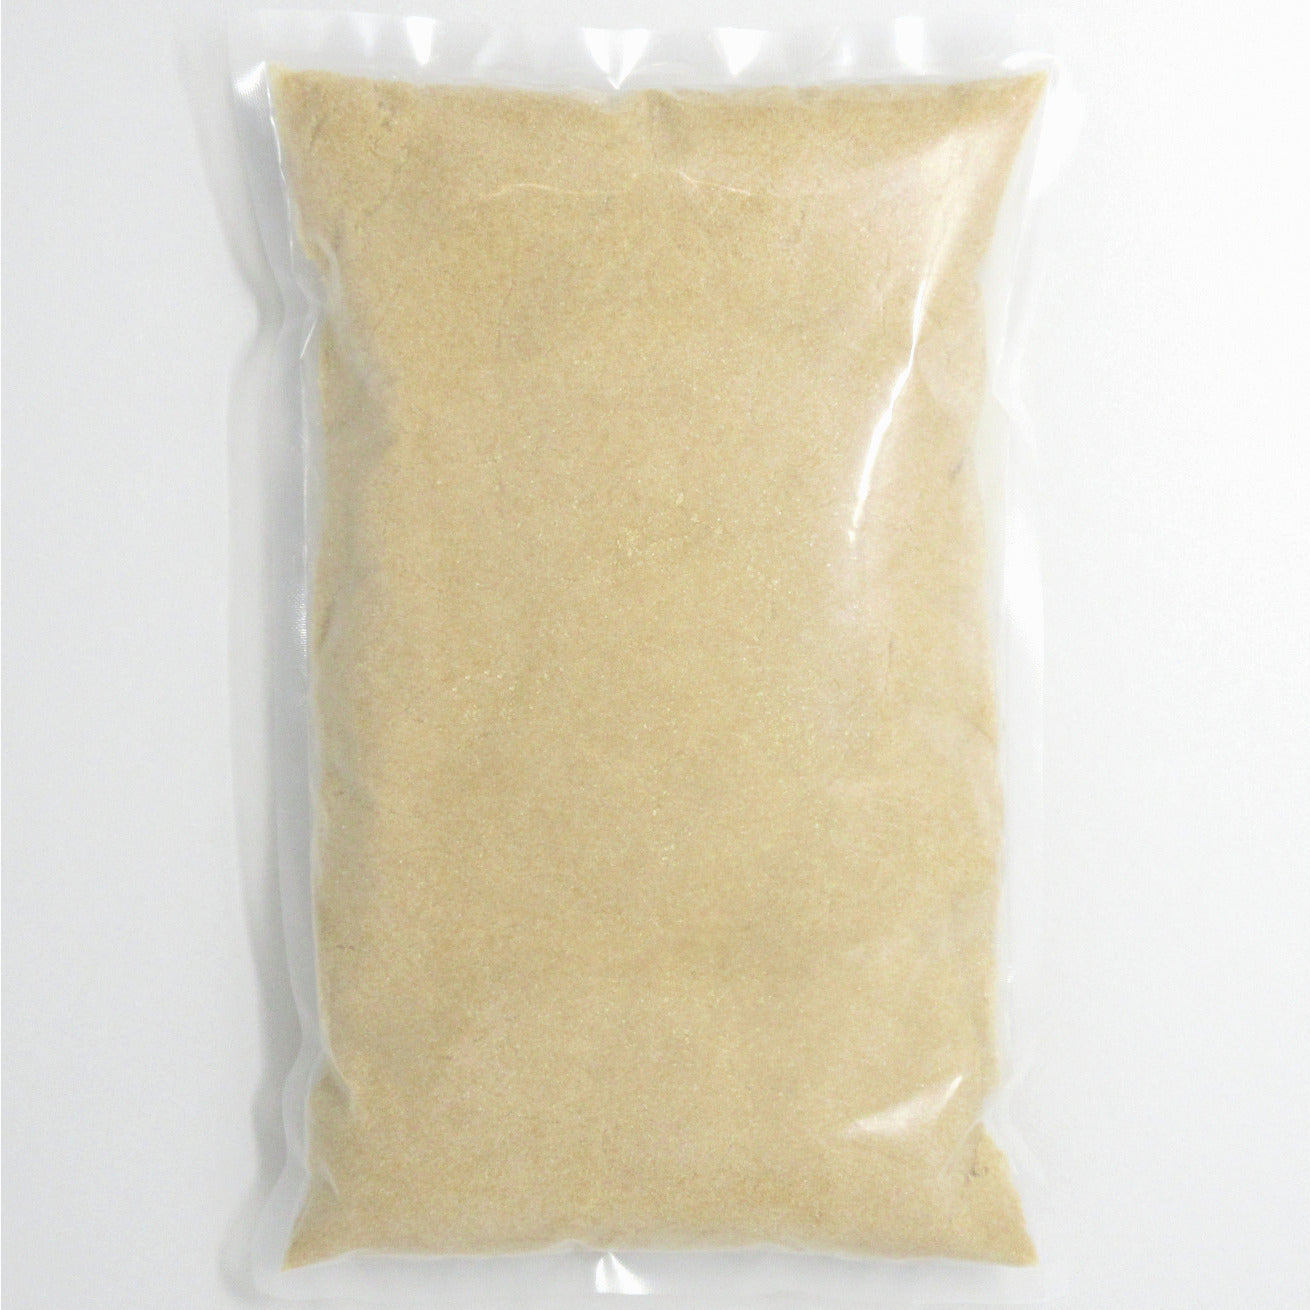 Flour Barrel product image - Yellow Sugar